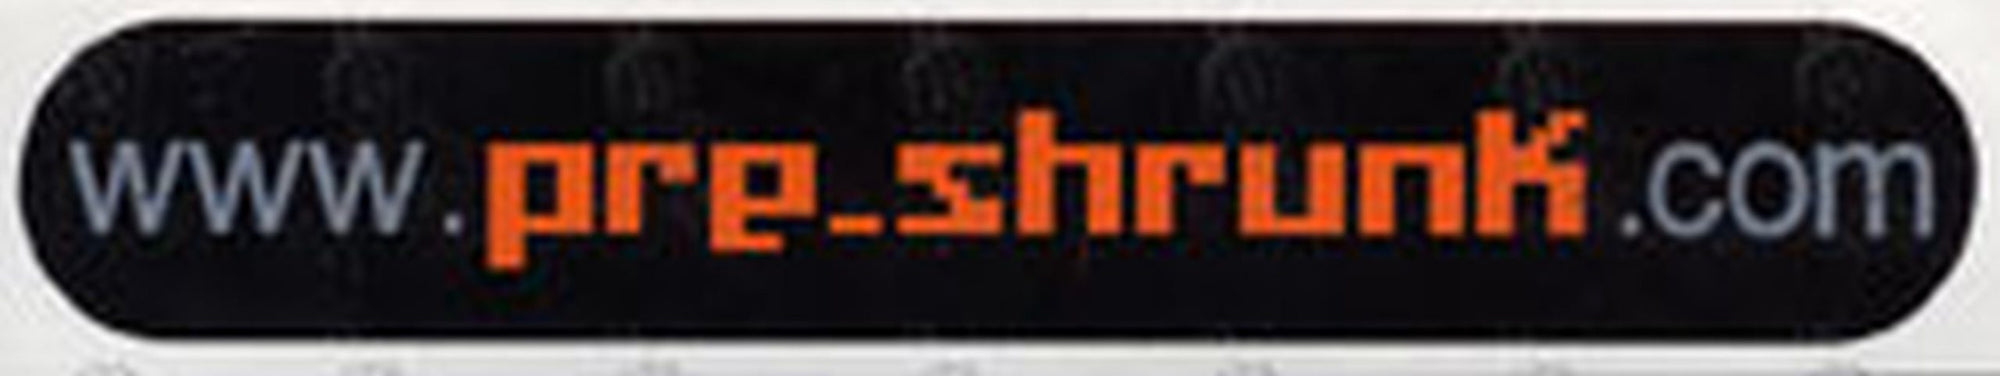 PRE-SHRUNK - 'www.pre_shrunk.com' Sticker - 1